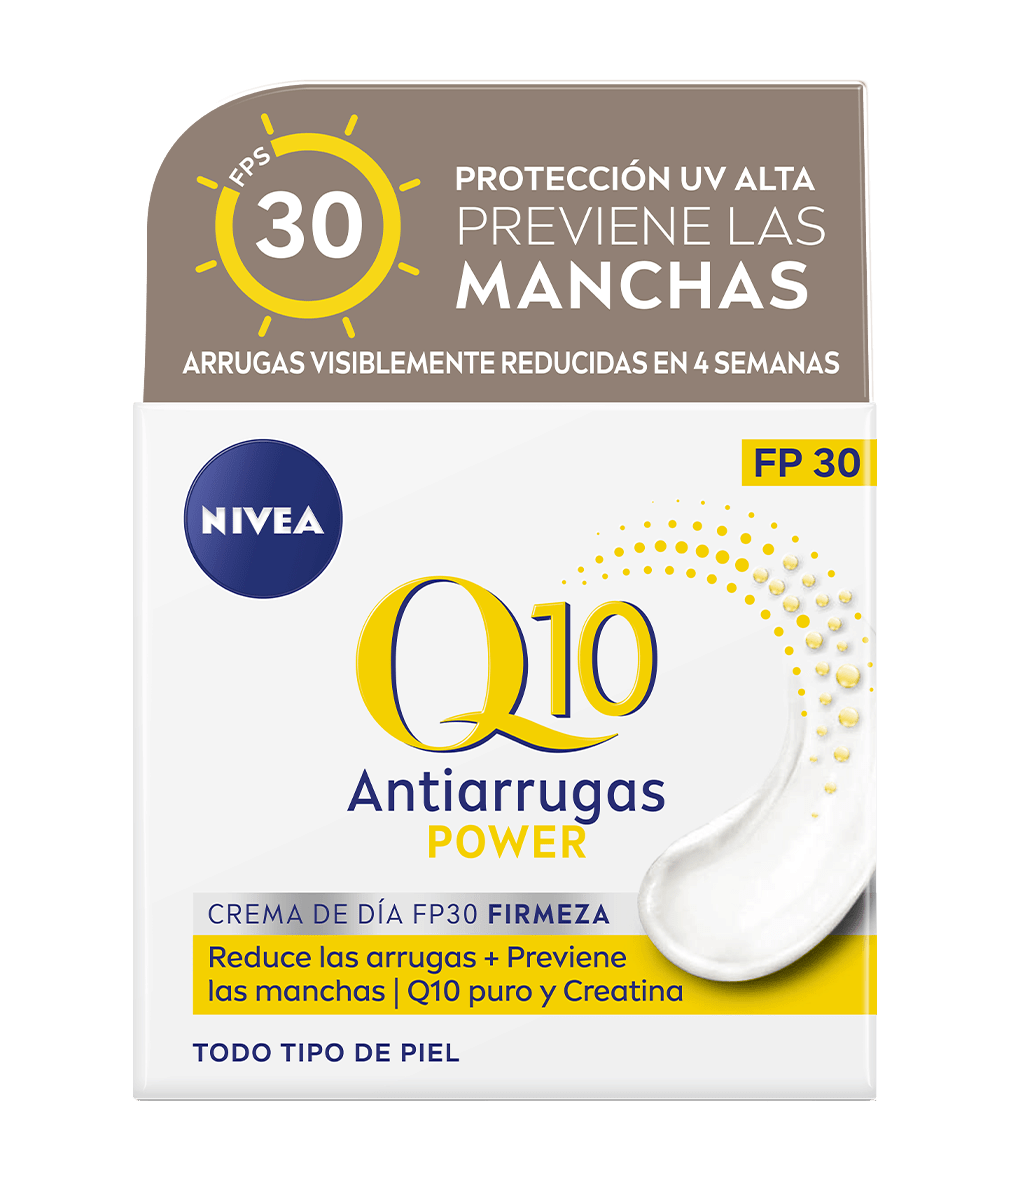 Q10 ANTIARRUGAS POWER Crema de Día Firmeza FP30 | NIVEA